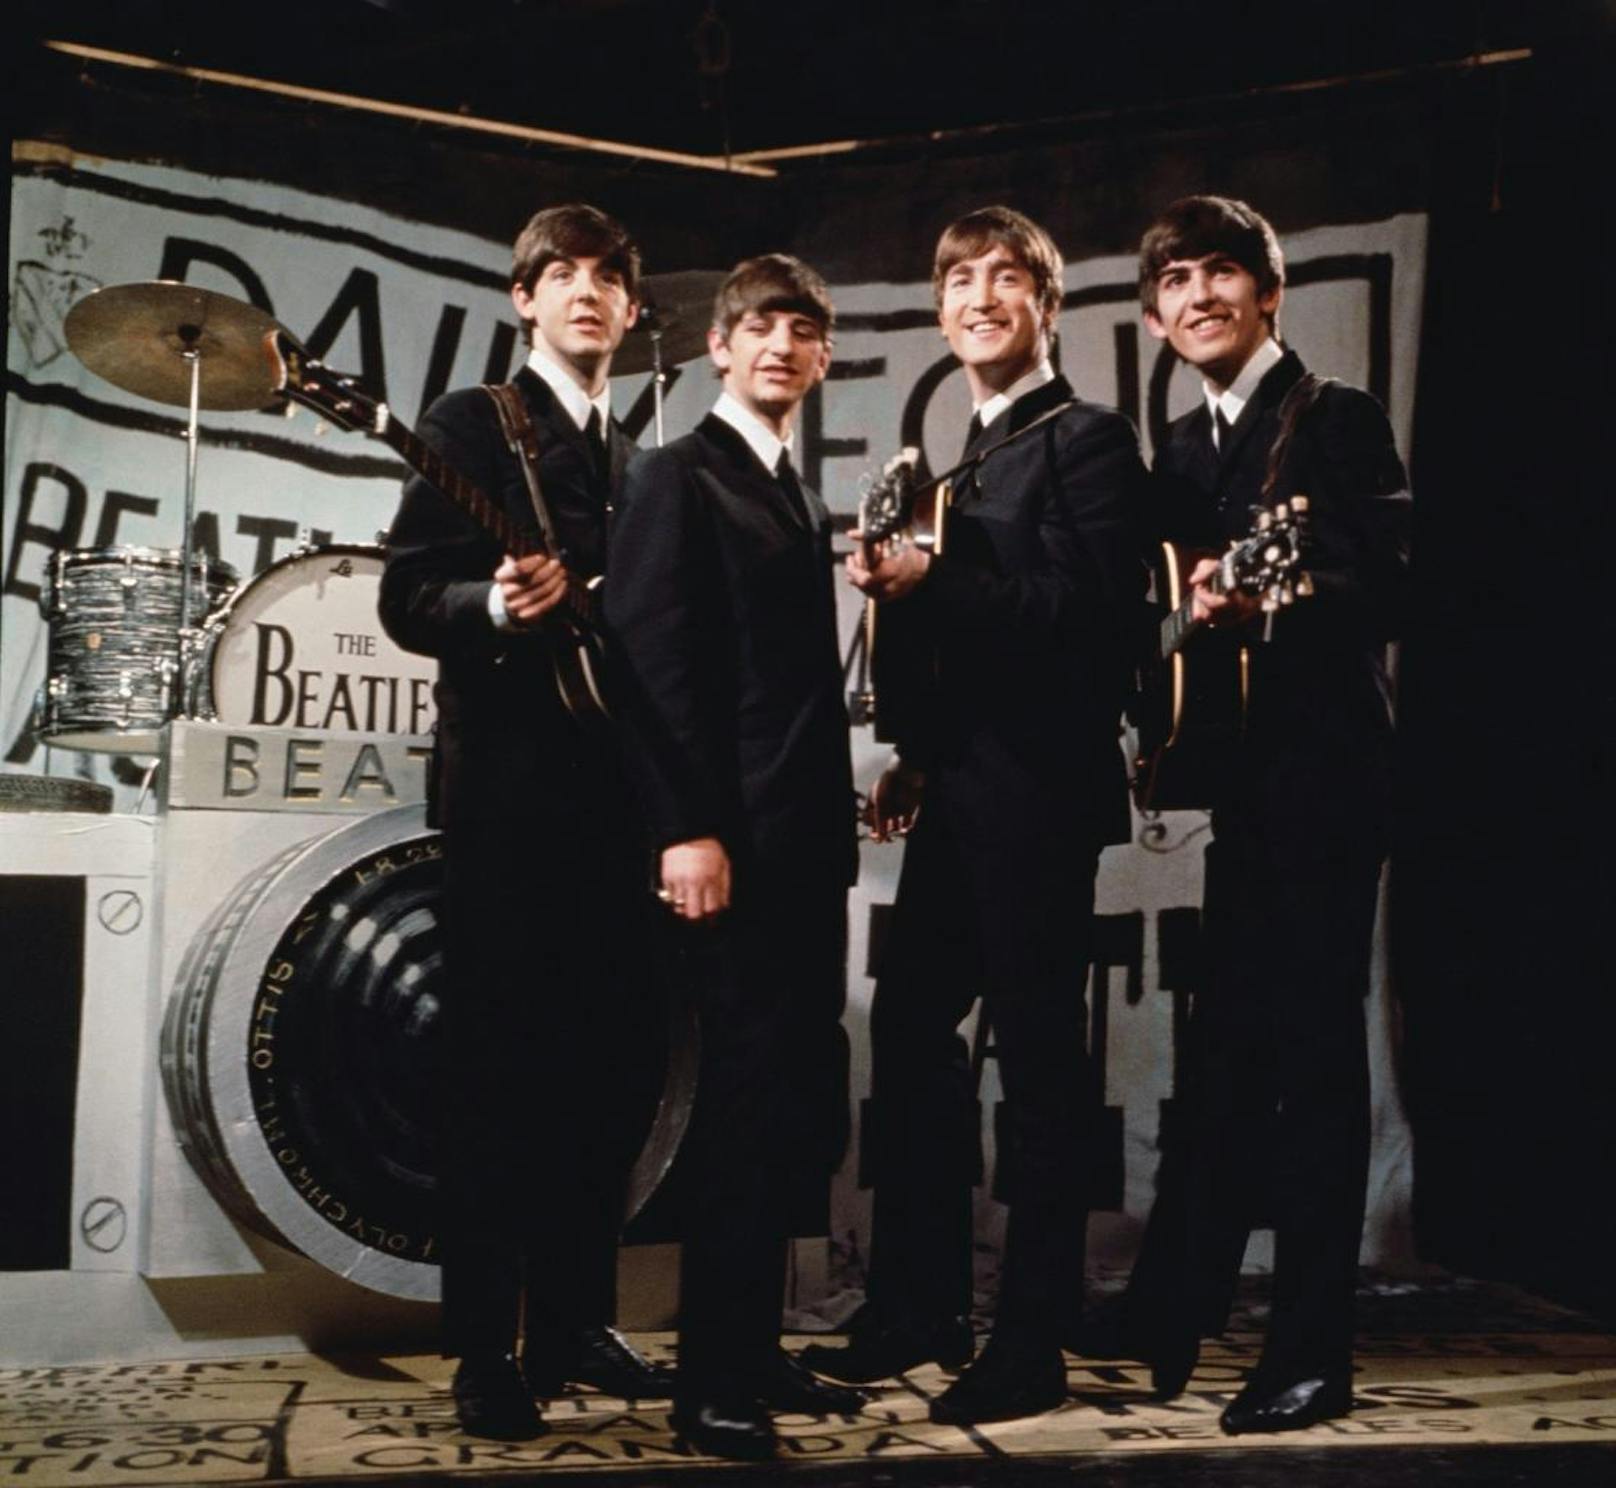 Das Max Planck Istitut hat die perfekten Popsongs berechnet: "Ob-La-Di Ob-La-Da" von den Beatles